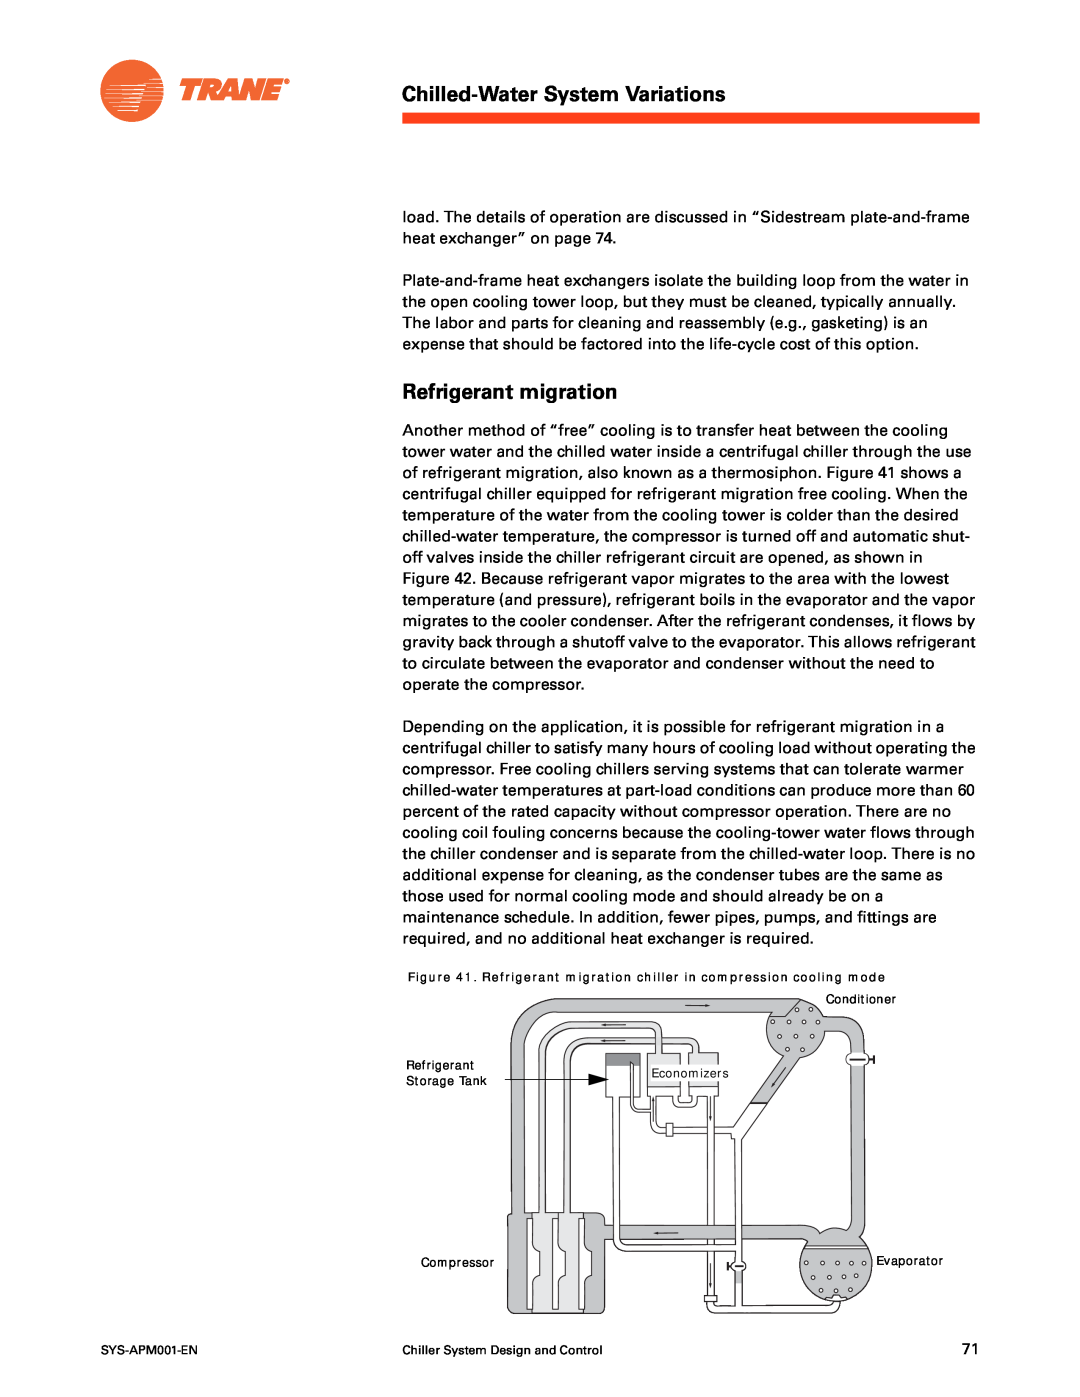 Trane SYS-APM001-EN manual Chilled-Water System Variations, Refrigerant migration 